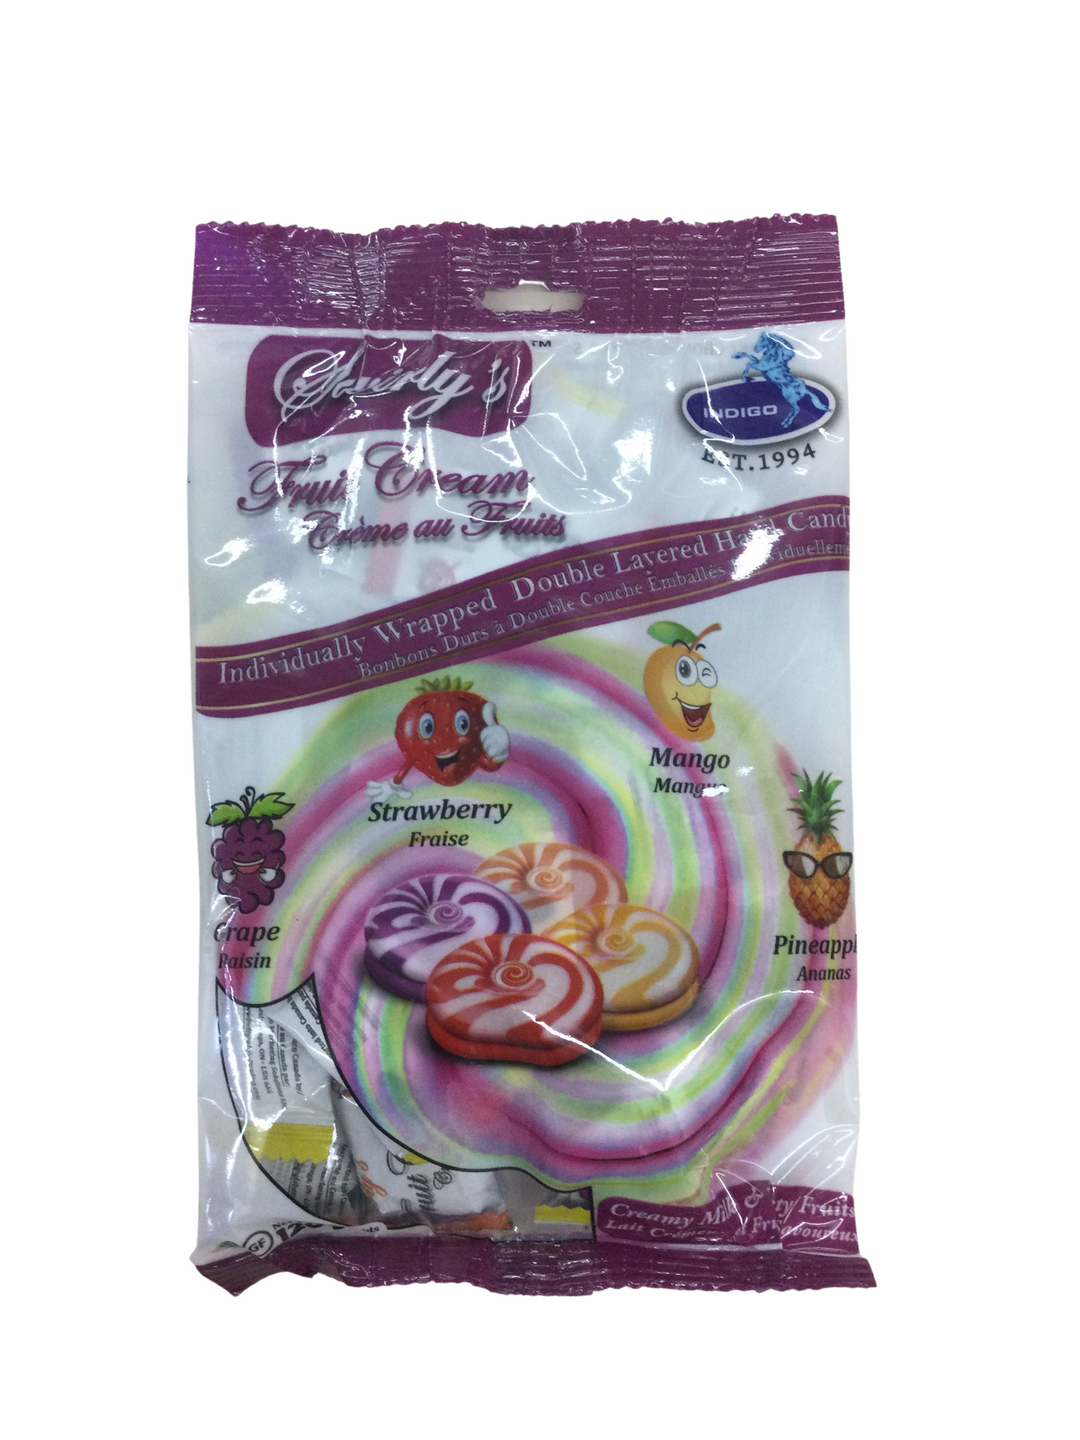 Swirly’s Fruit Cream Candy